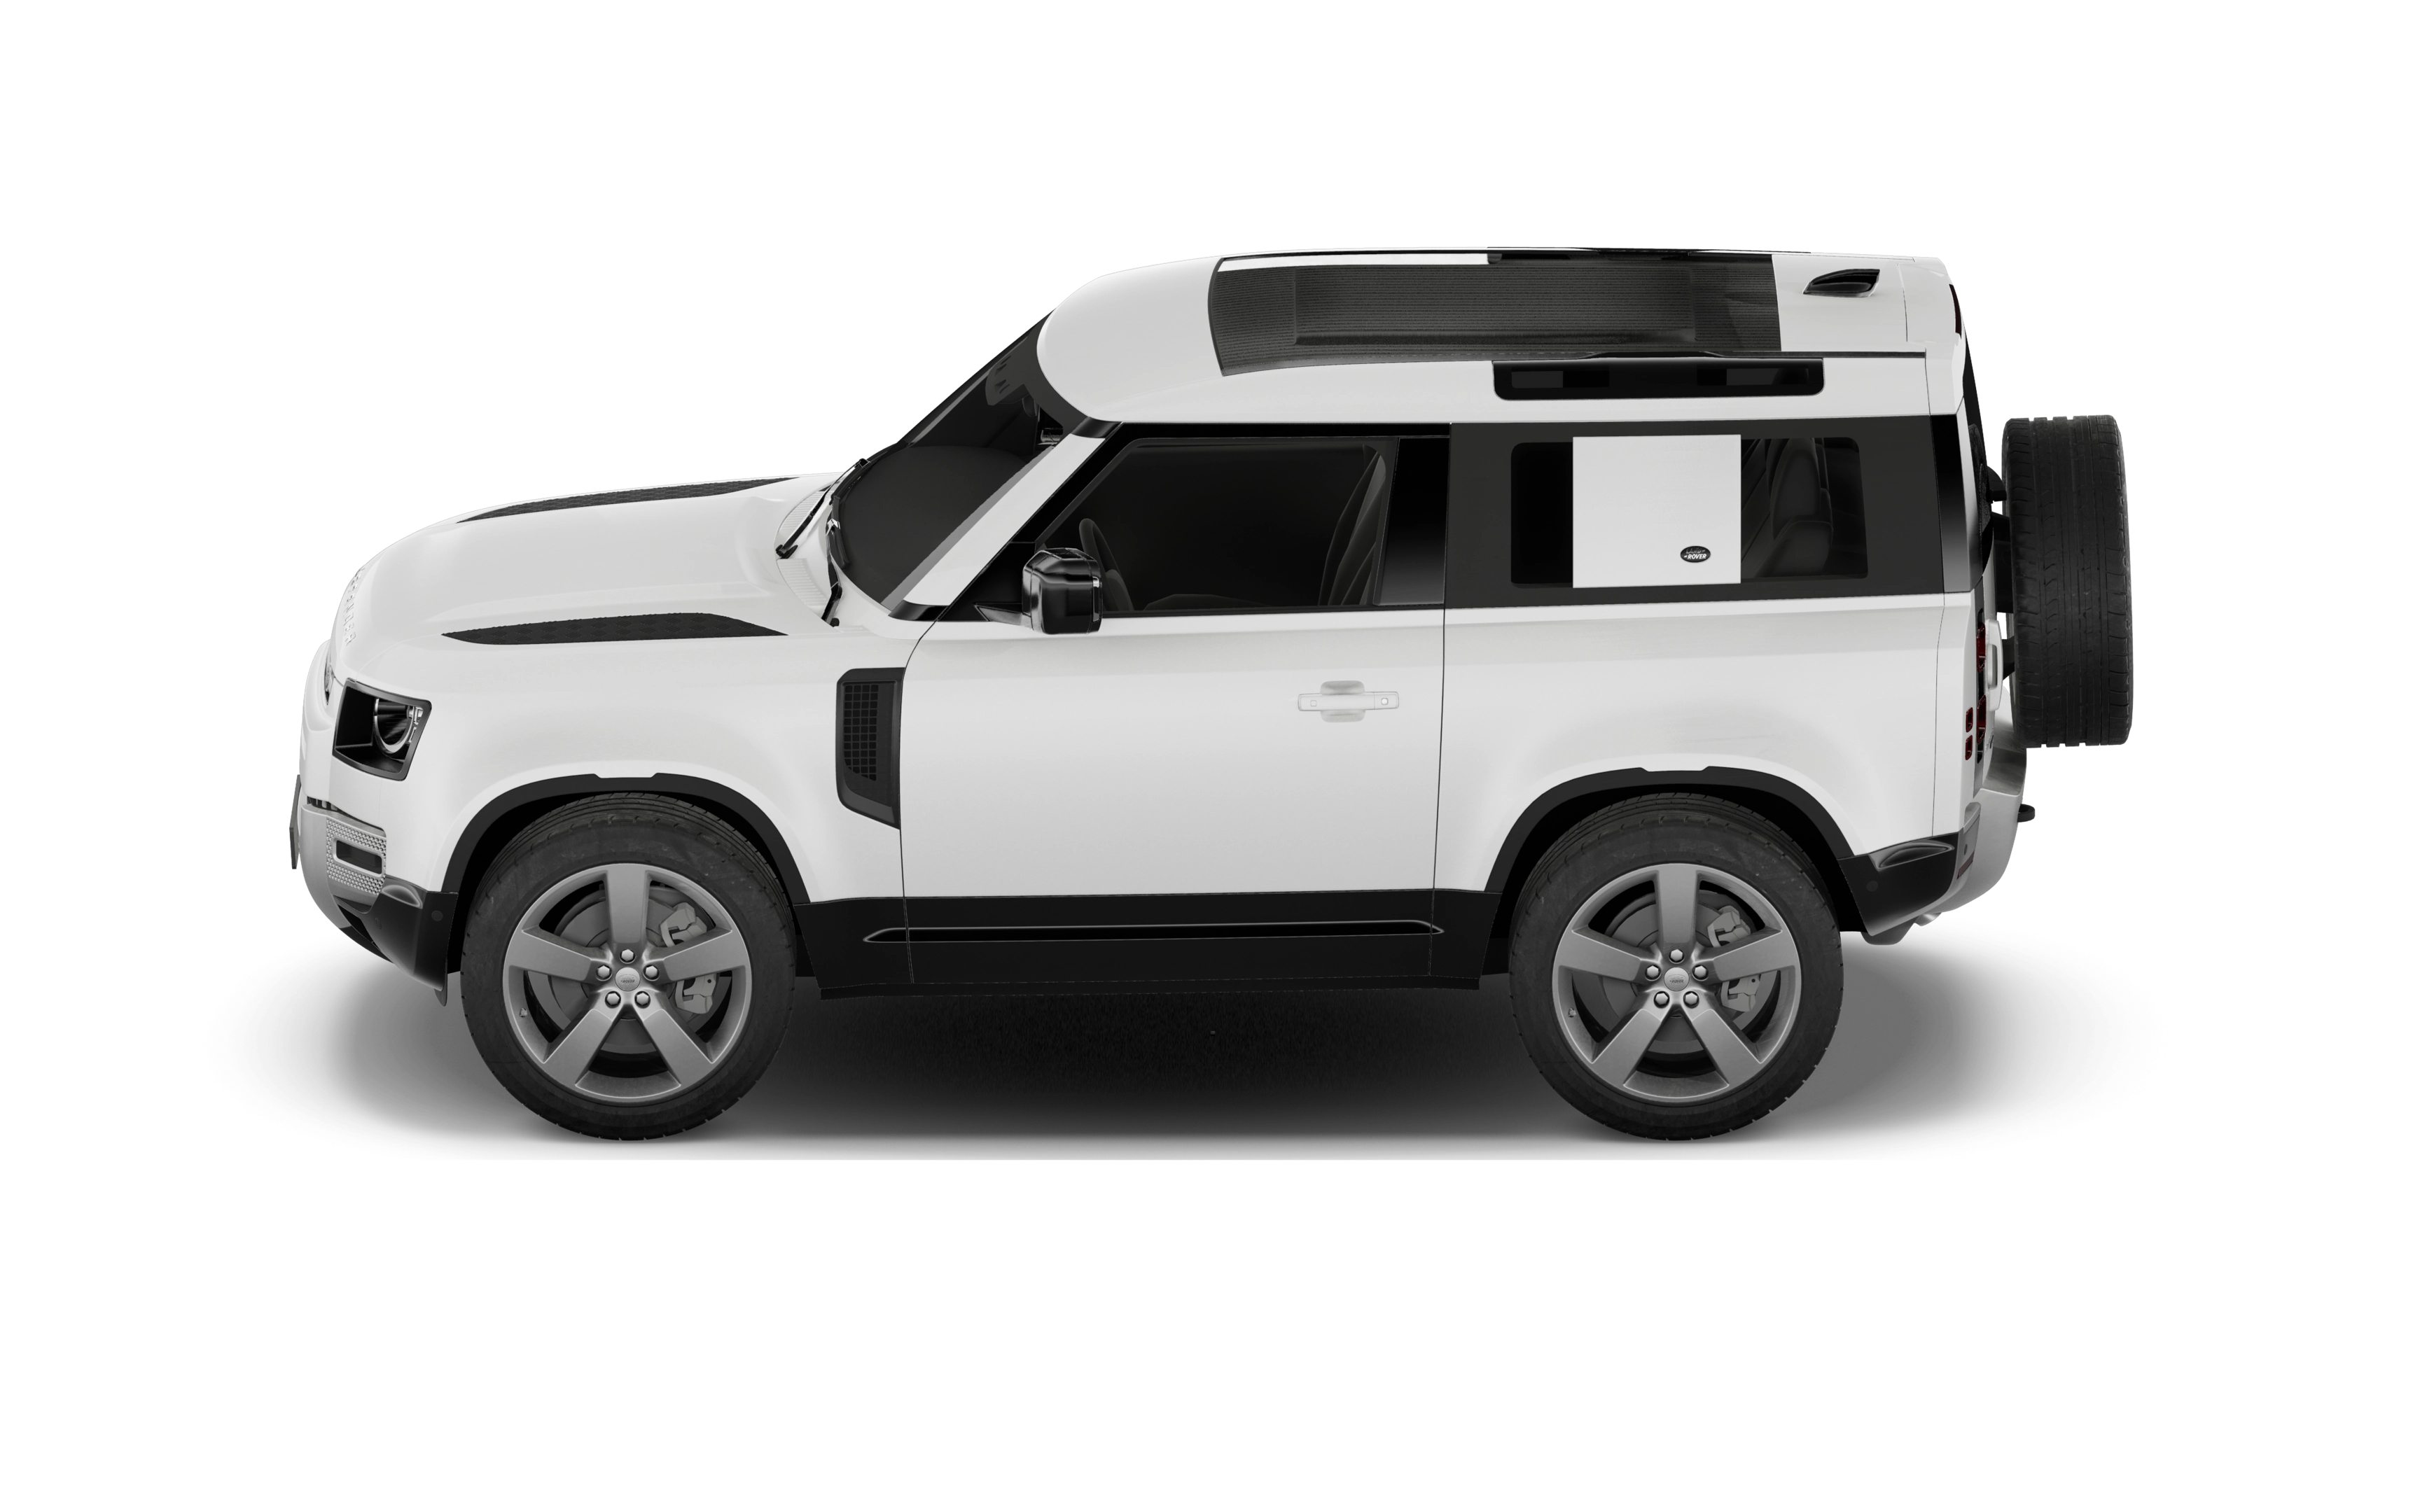 Land rover defender estate 3.0 d250 se 110 5 doors auto [7 seat]